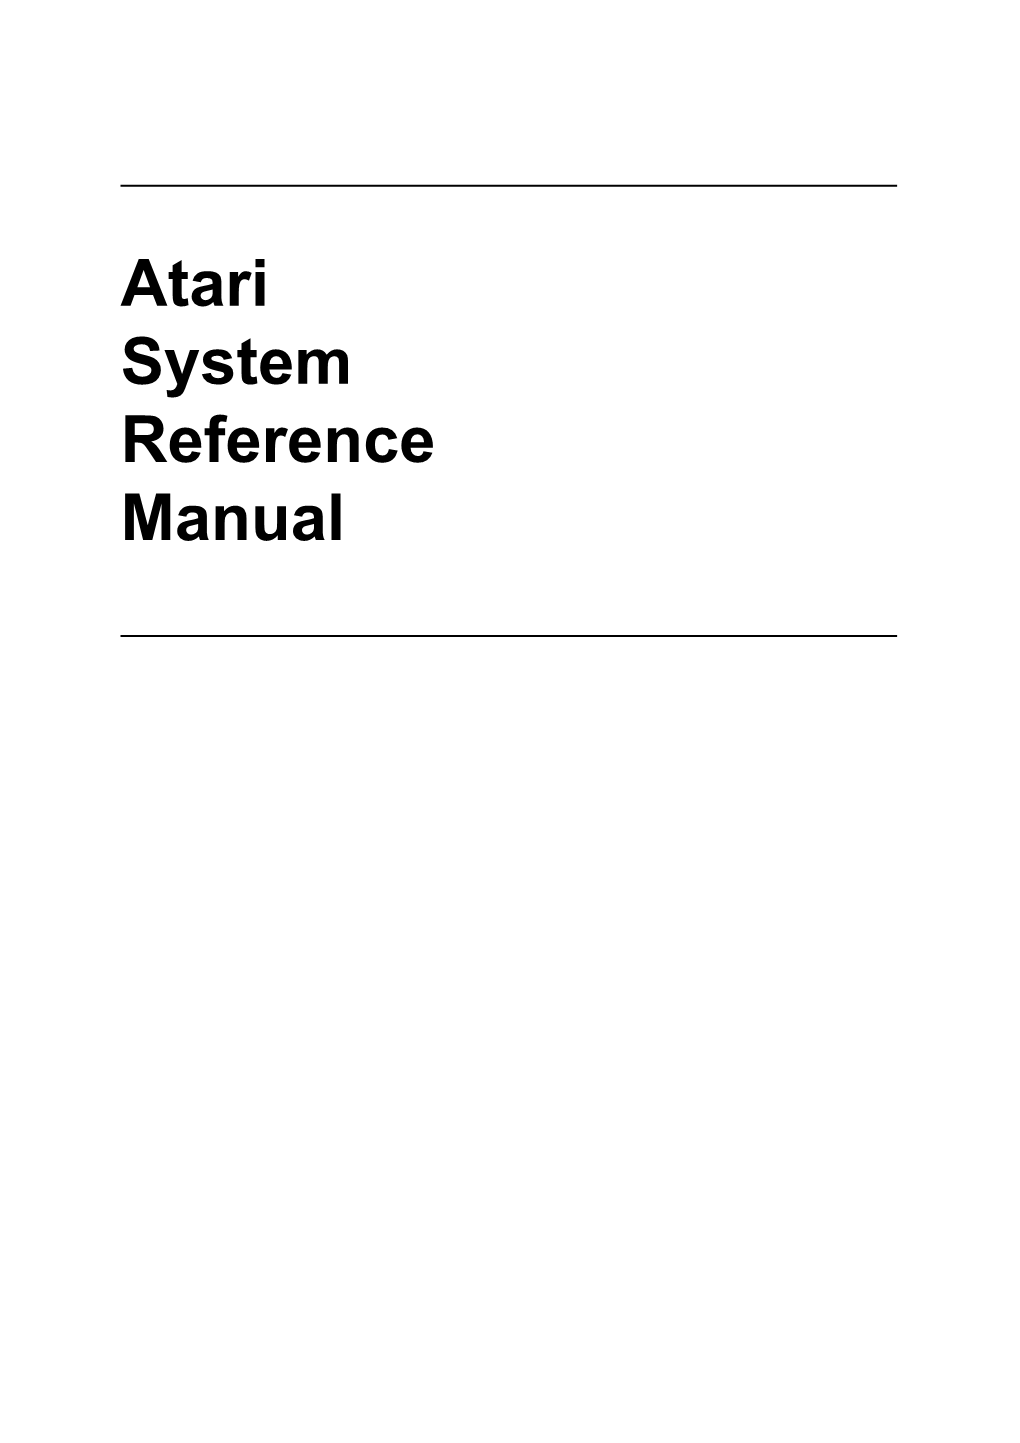 Atari System Reference Manual